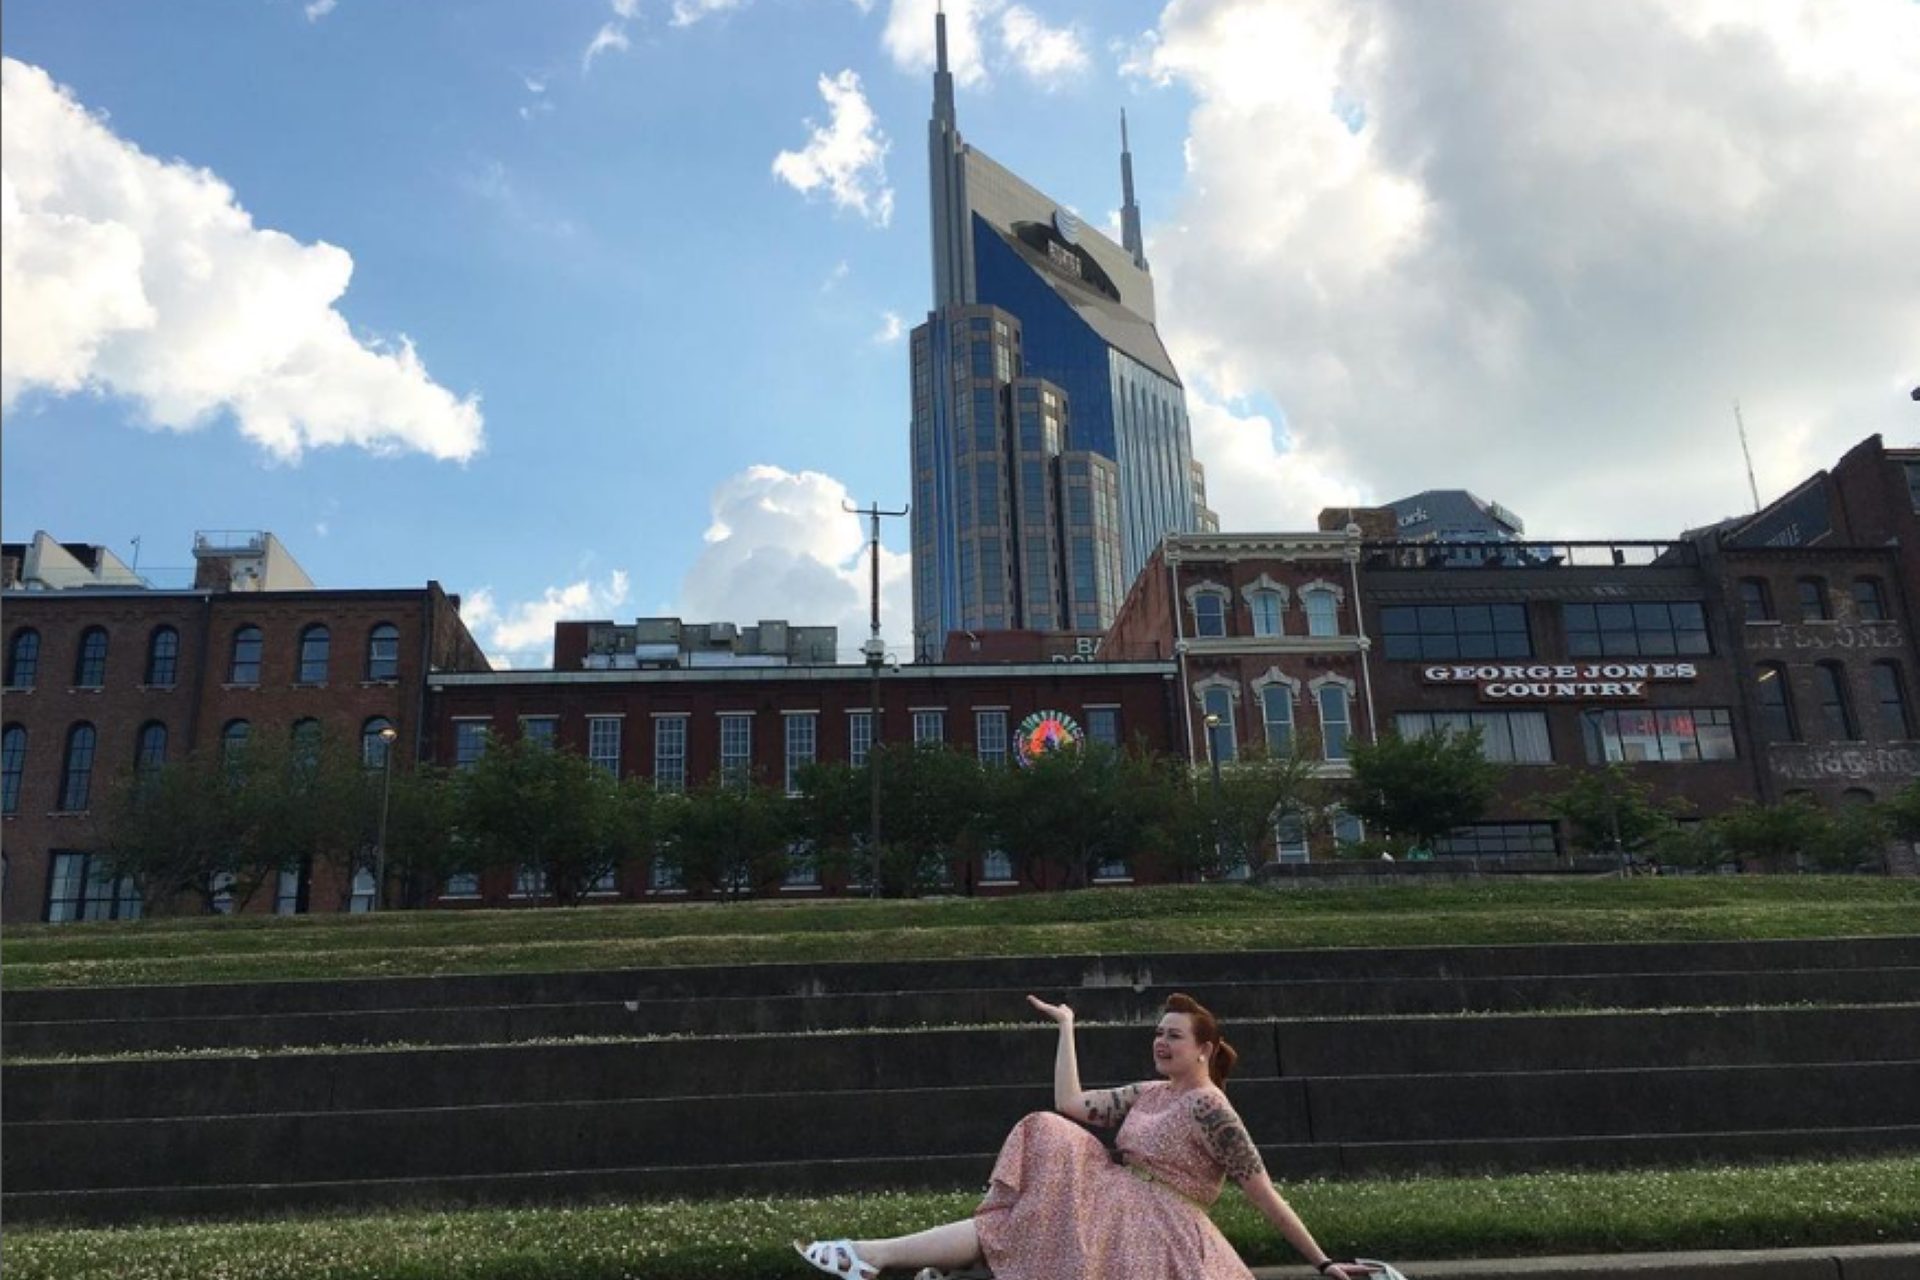 Celebrating her anniversary in Nashville